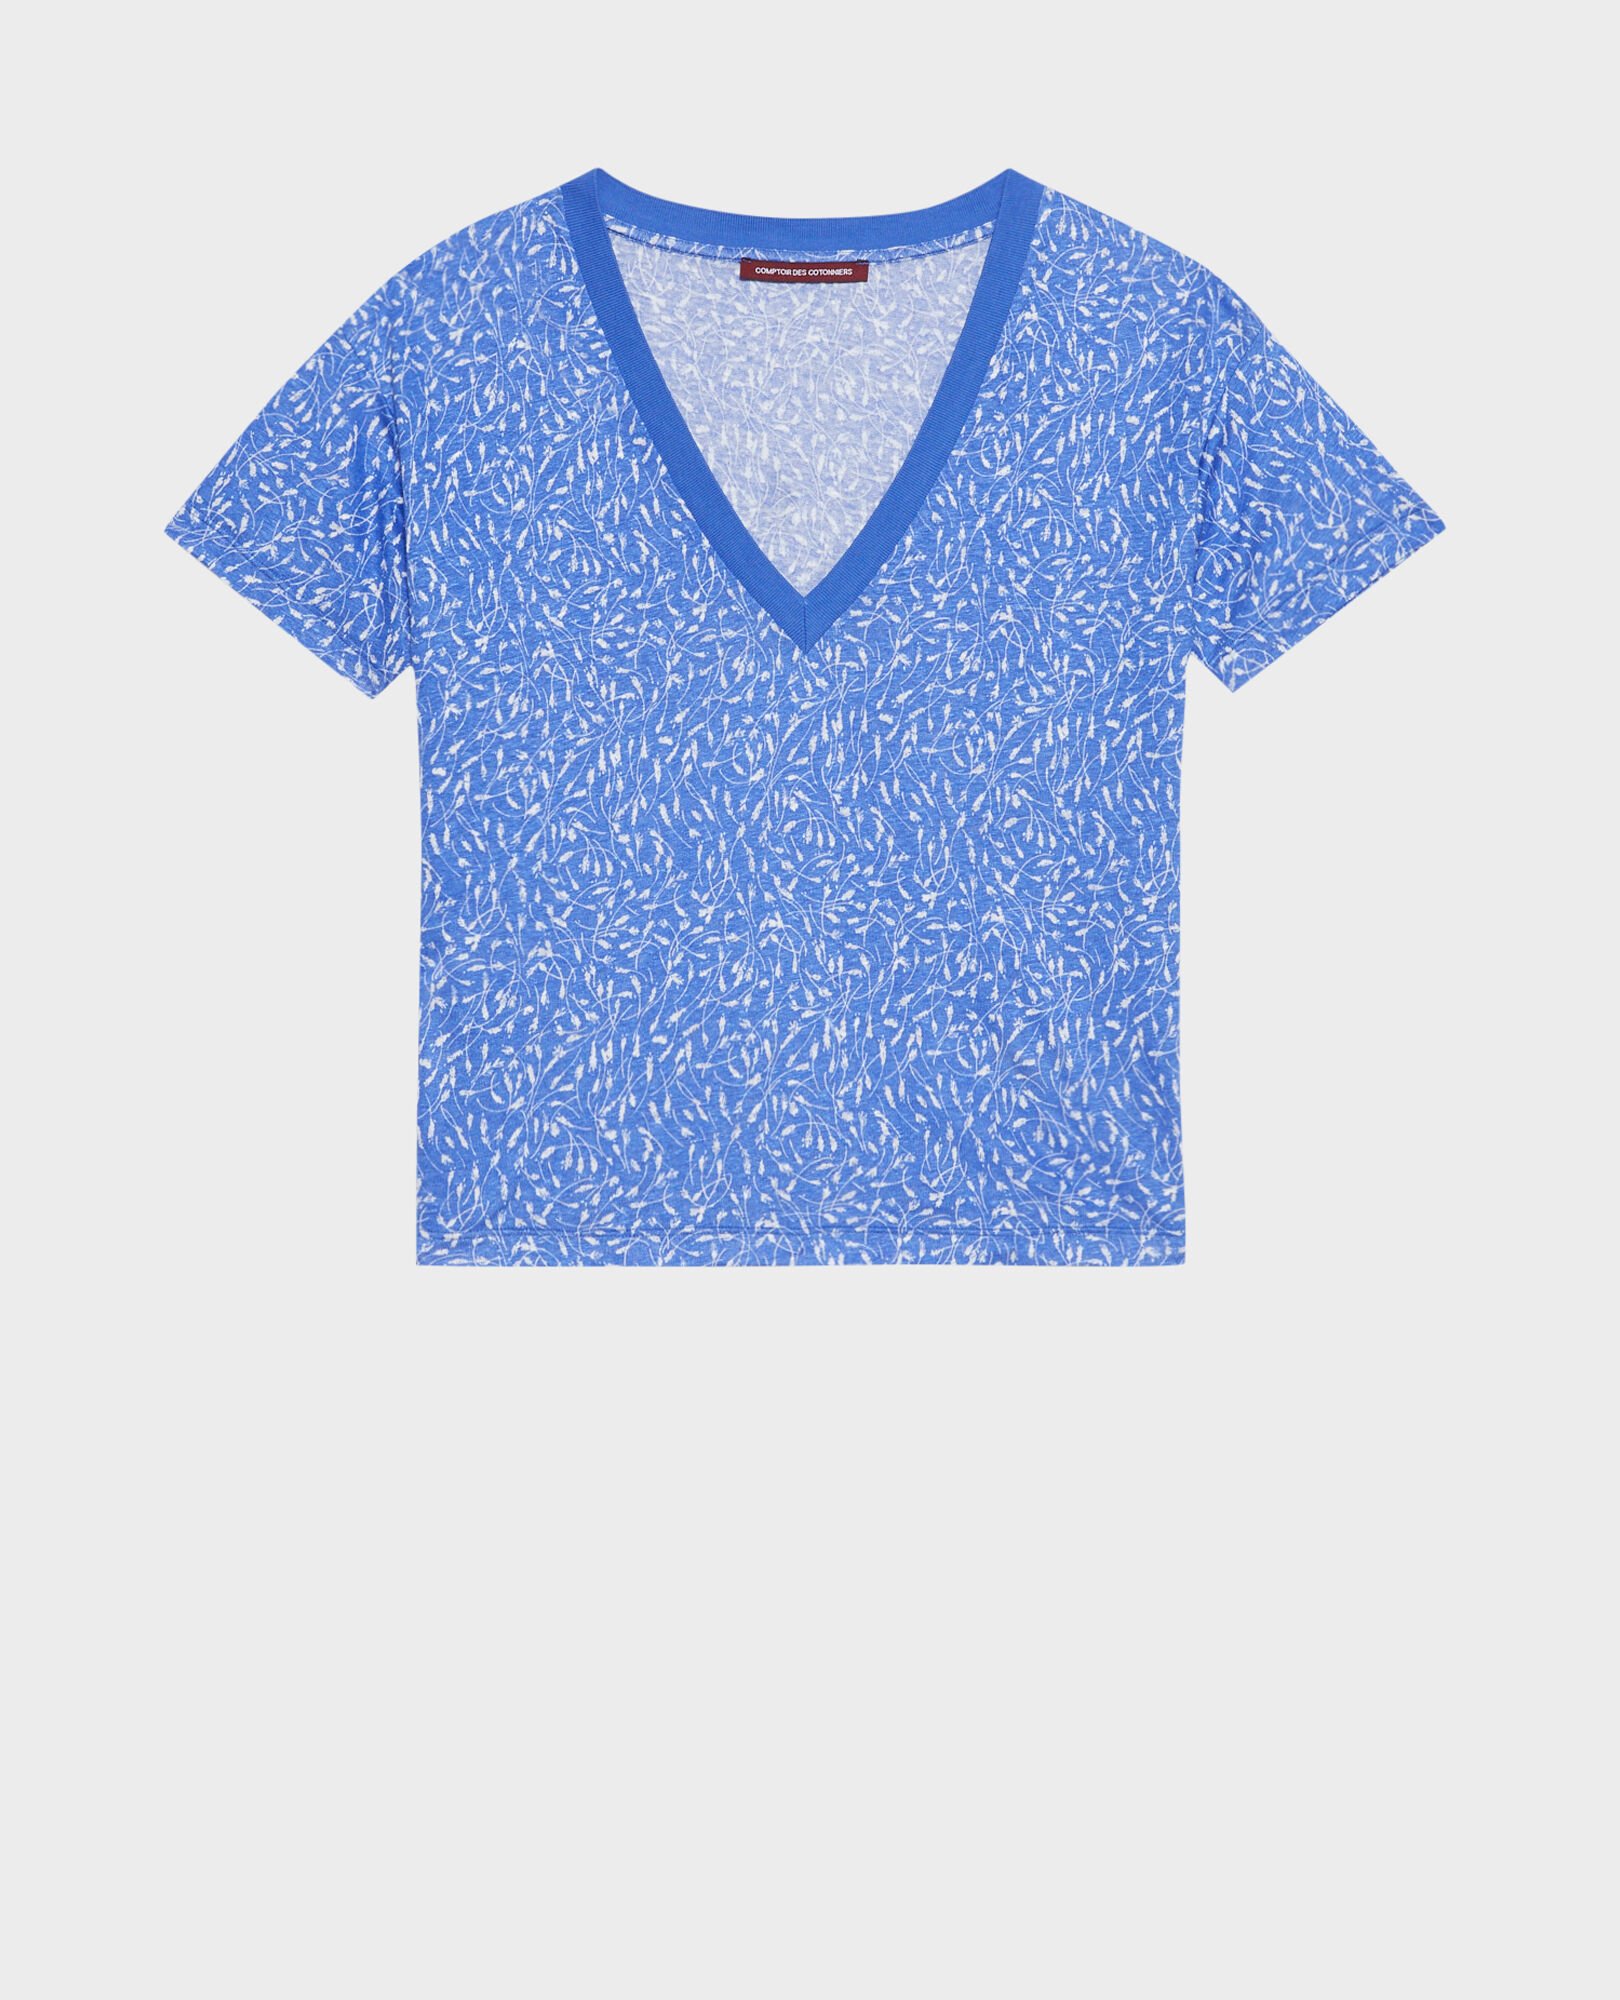 SARAH - Linen V-neck t-shirt 91 print blue 2ste338f05